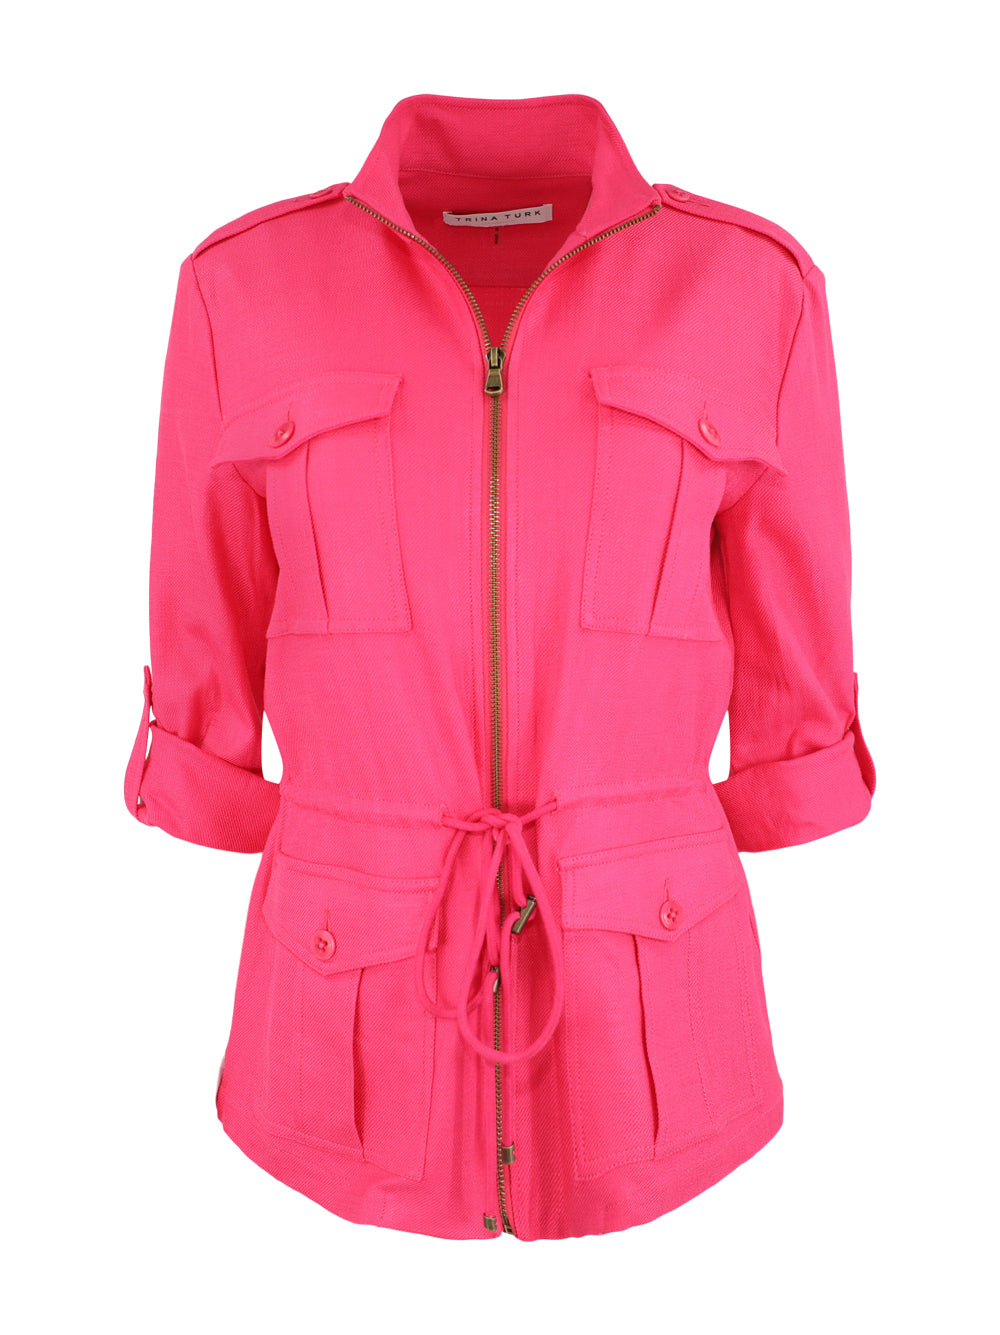 Trina Turk Bouyant Jacket in Pink Paradise